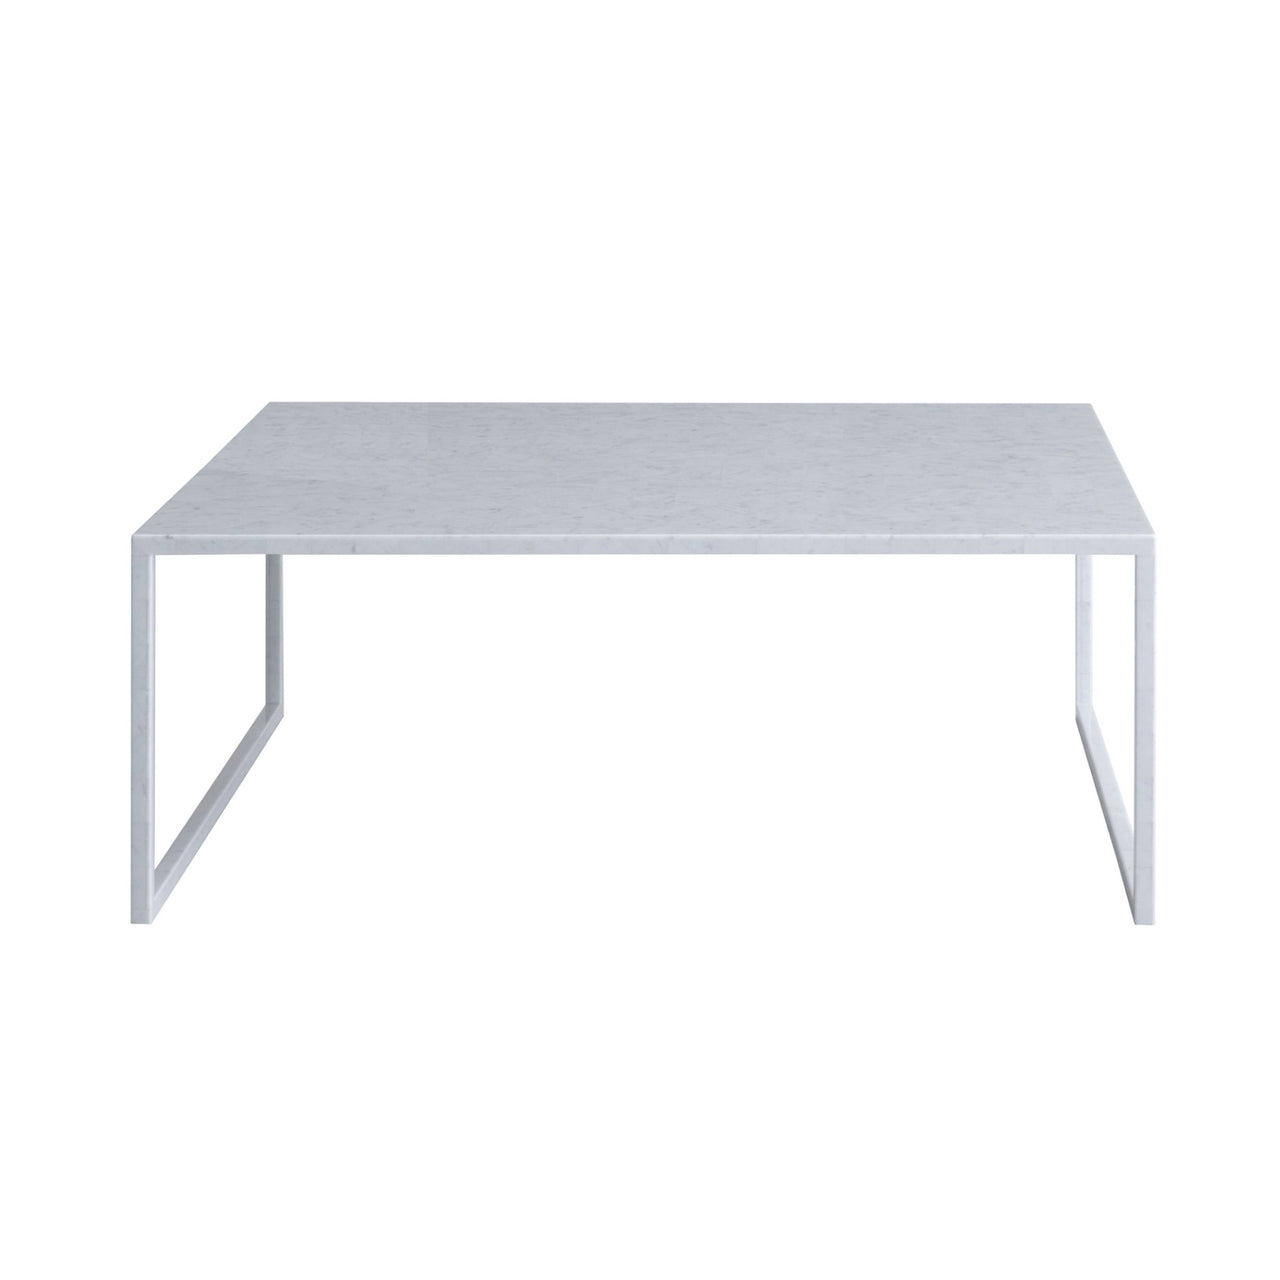 BK Center Table: White Carrara Marble + Square